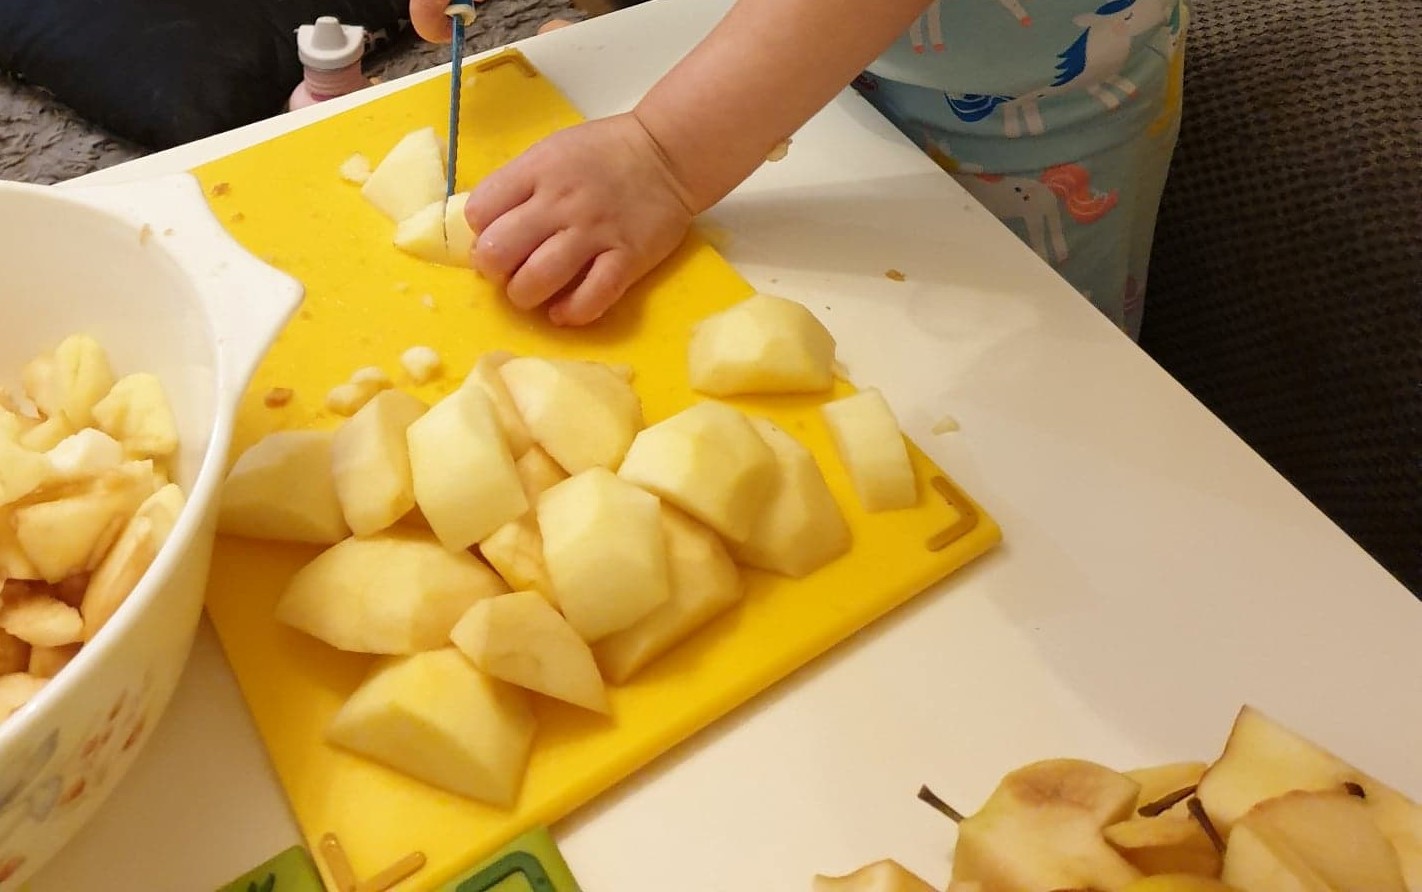 Child slicing apples